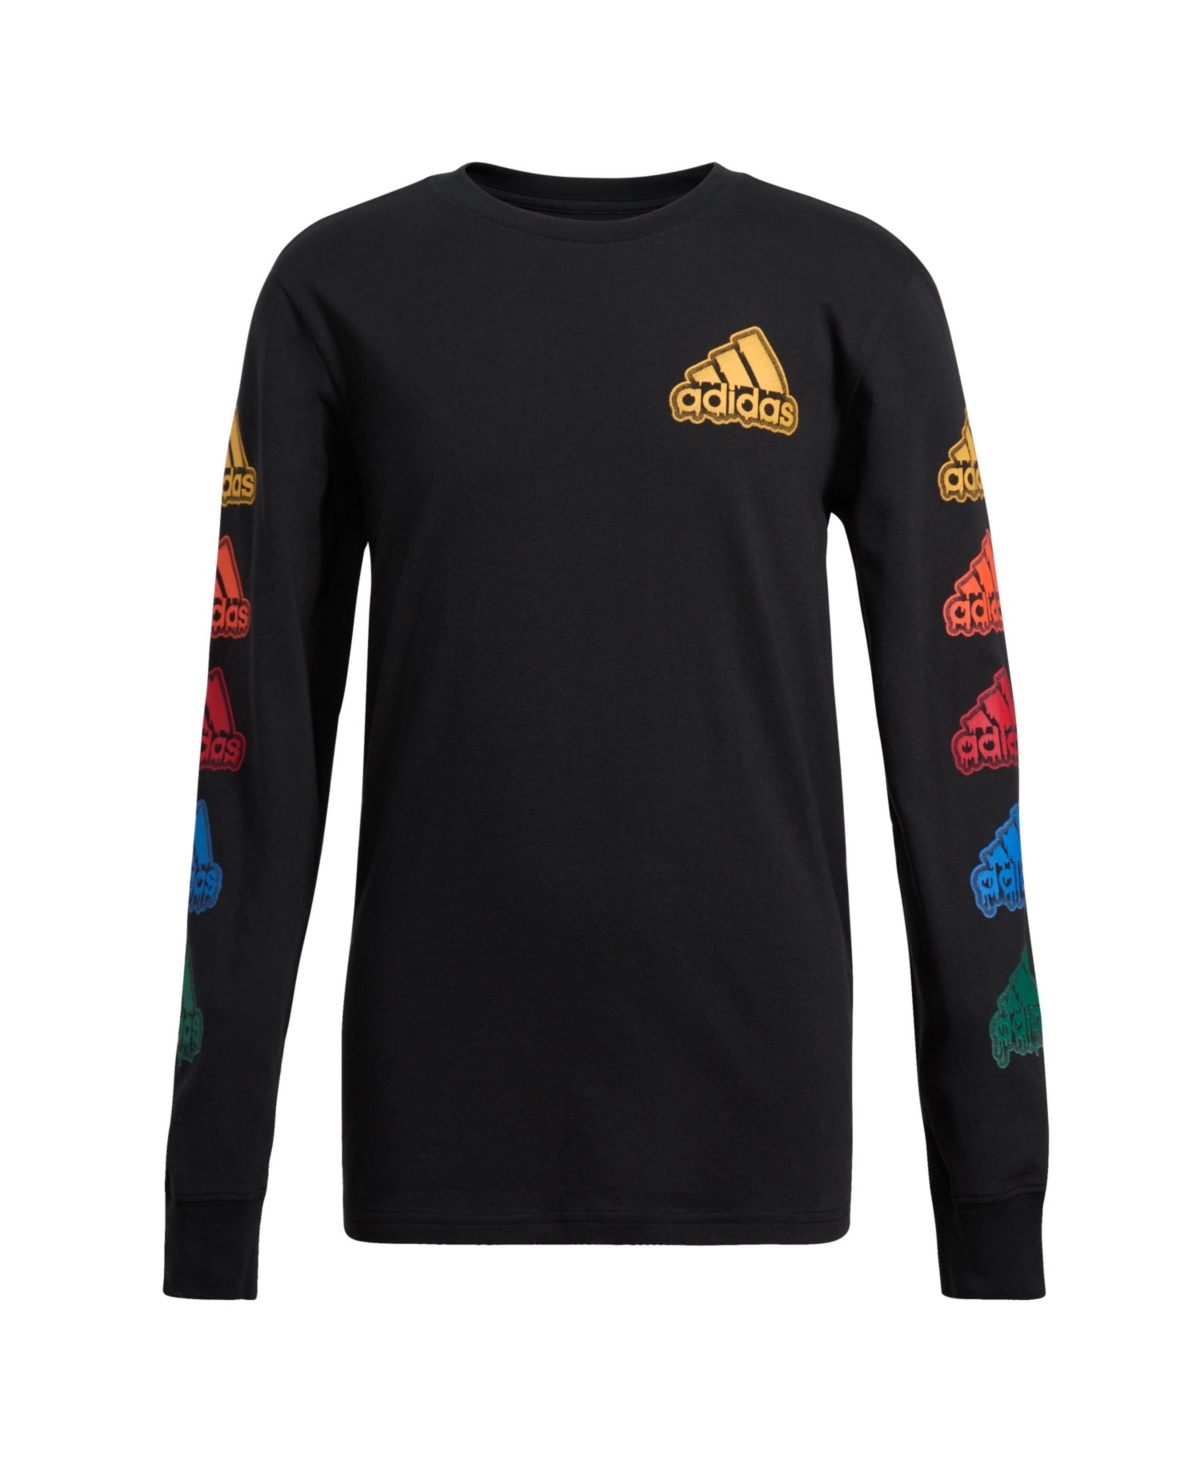 Adidas Originals Adidas Big Boys Long Sleeve Meltdown T-shirt In Black With Multicolor